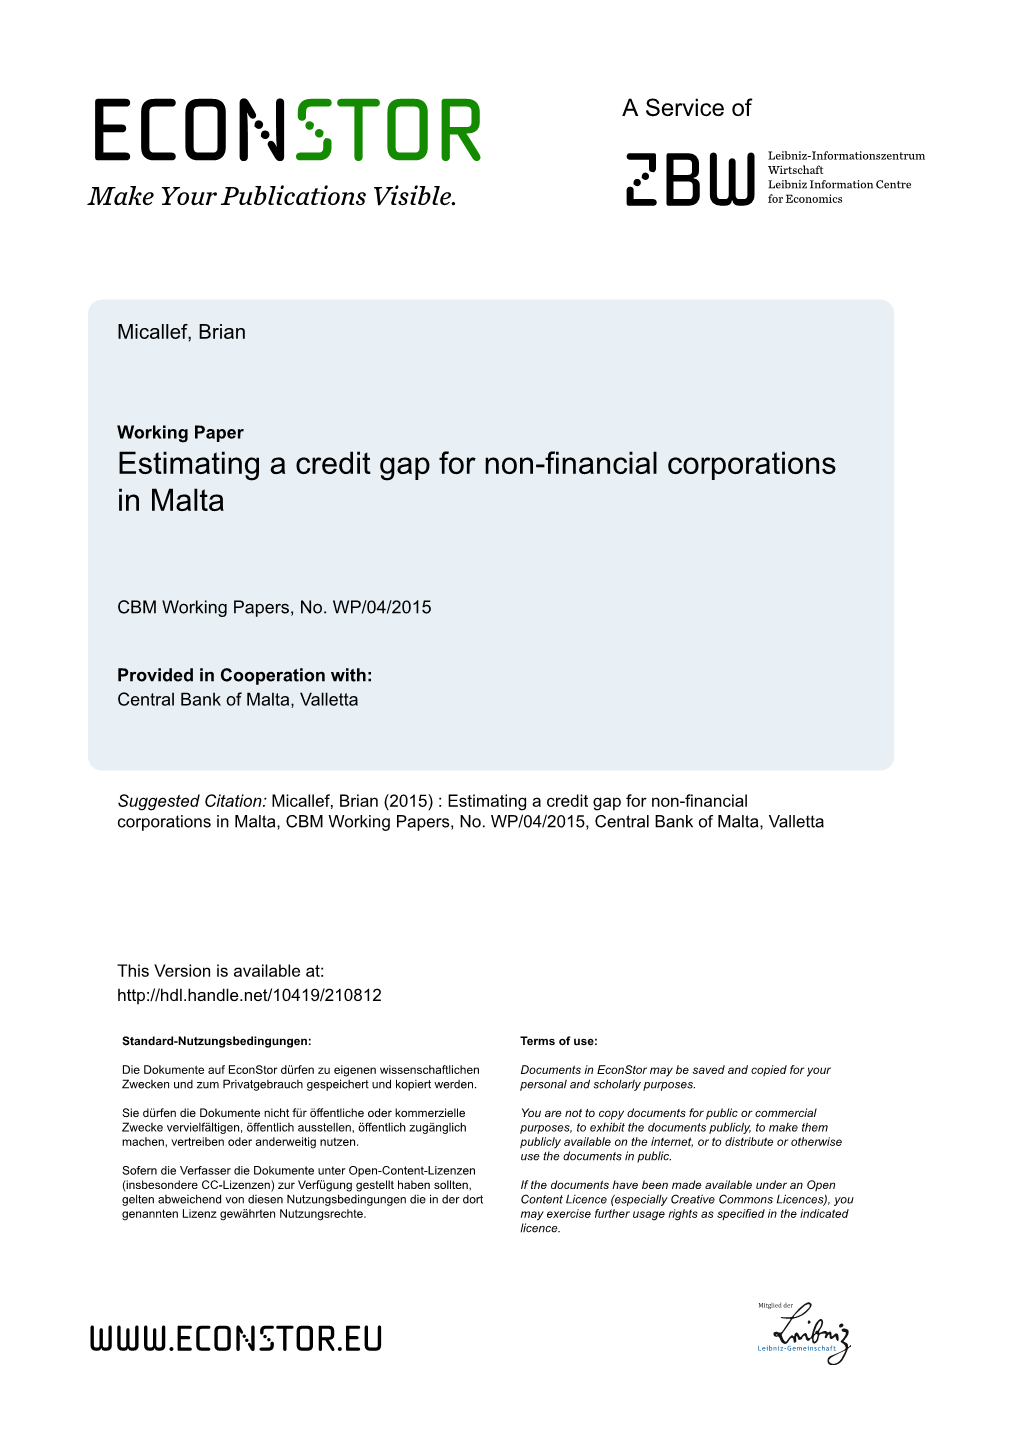 Estimating a Credit Gap for Non-Financial Corporations in Malta